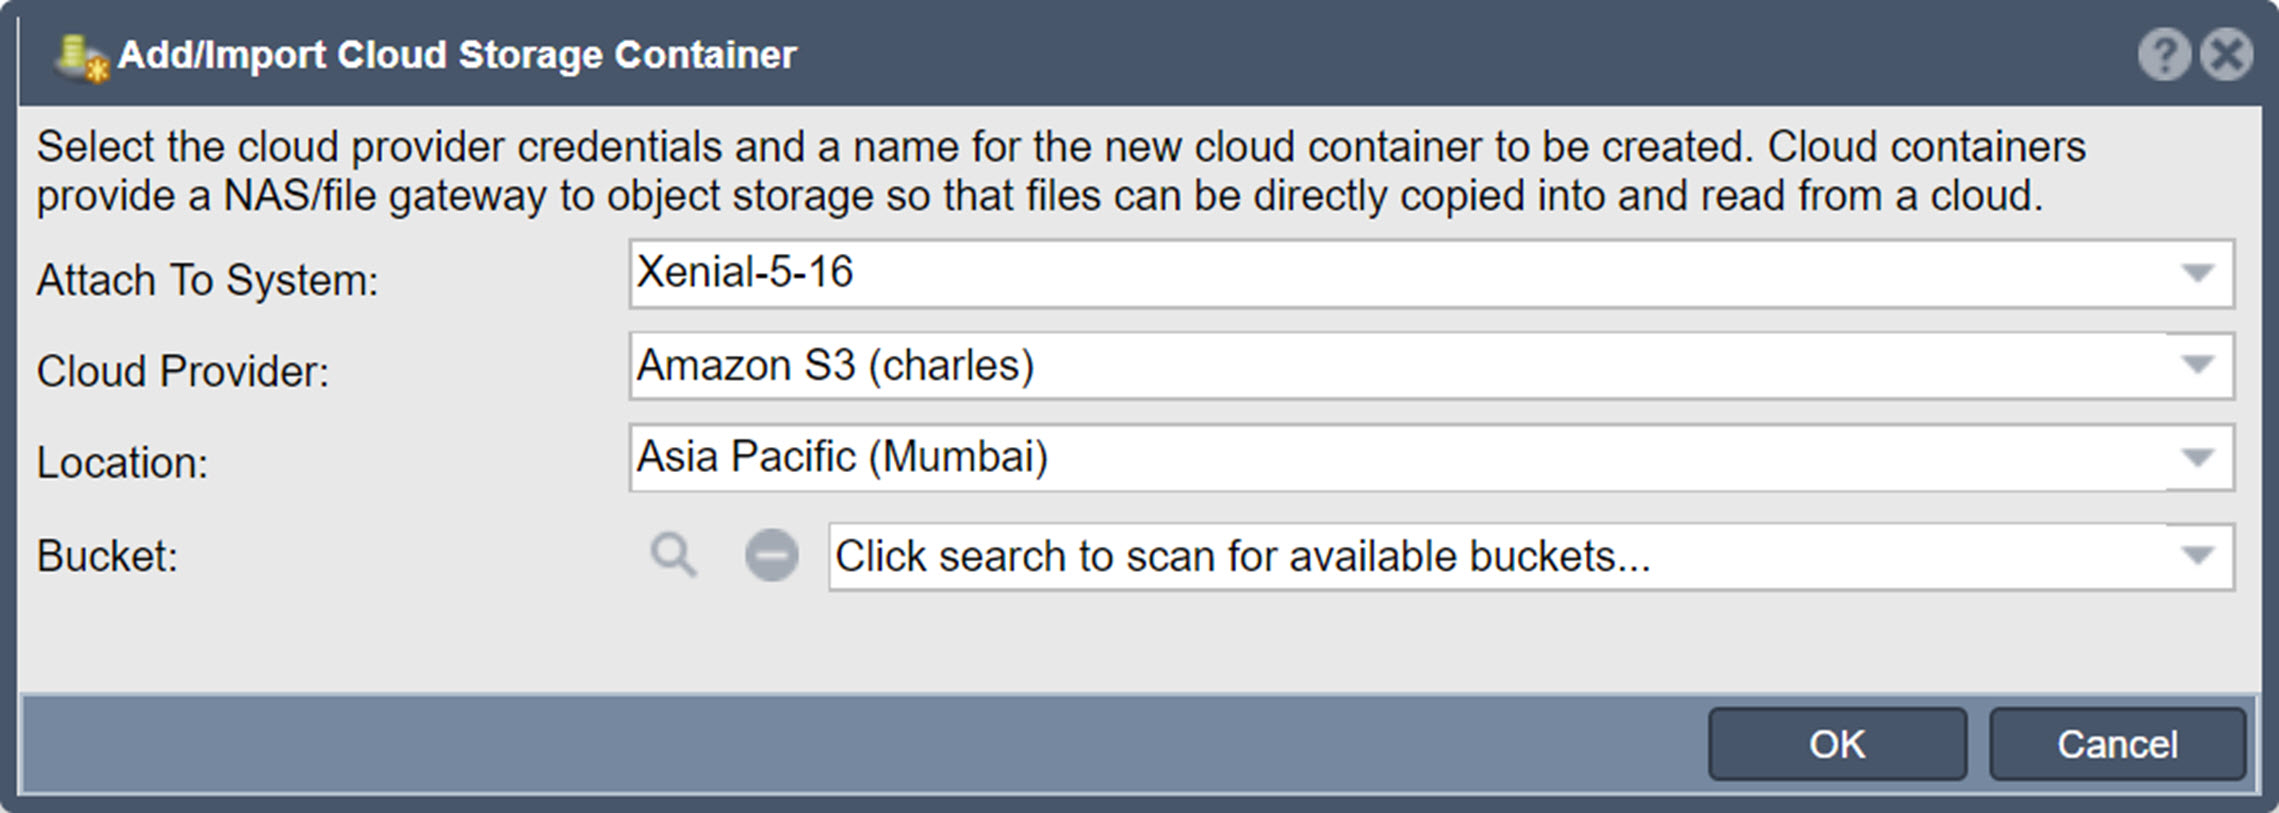 Add Cloud Storage Container.jpg